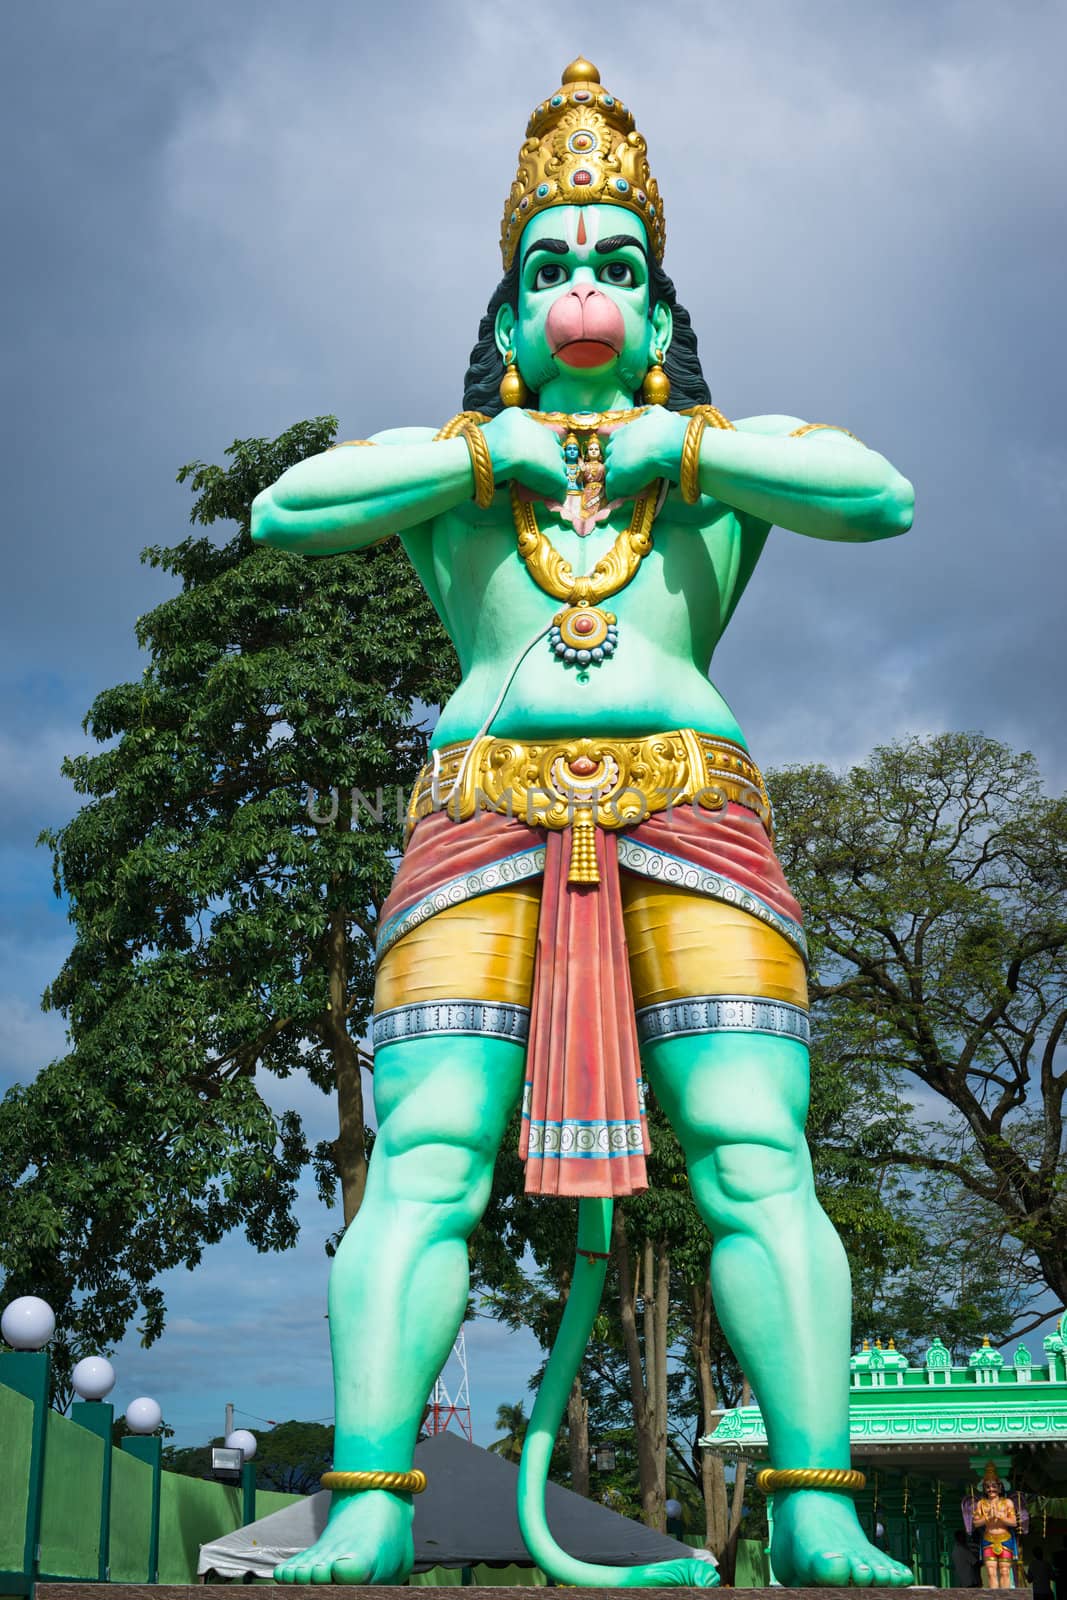 Statue of a giant Lord Hanuman near Batu Caves in Malaysia. Hanuman is a deity in hinduism.